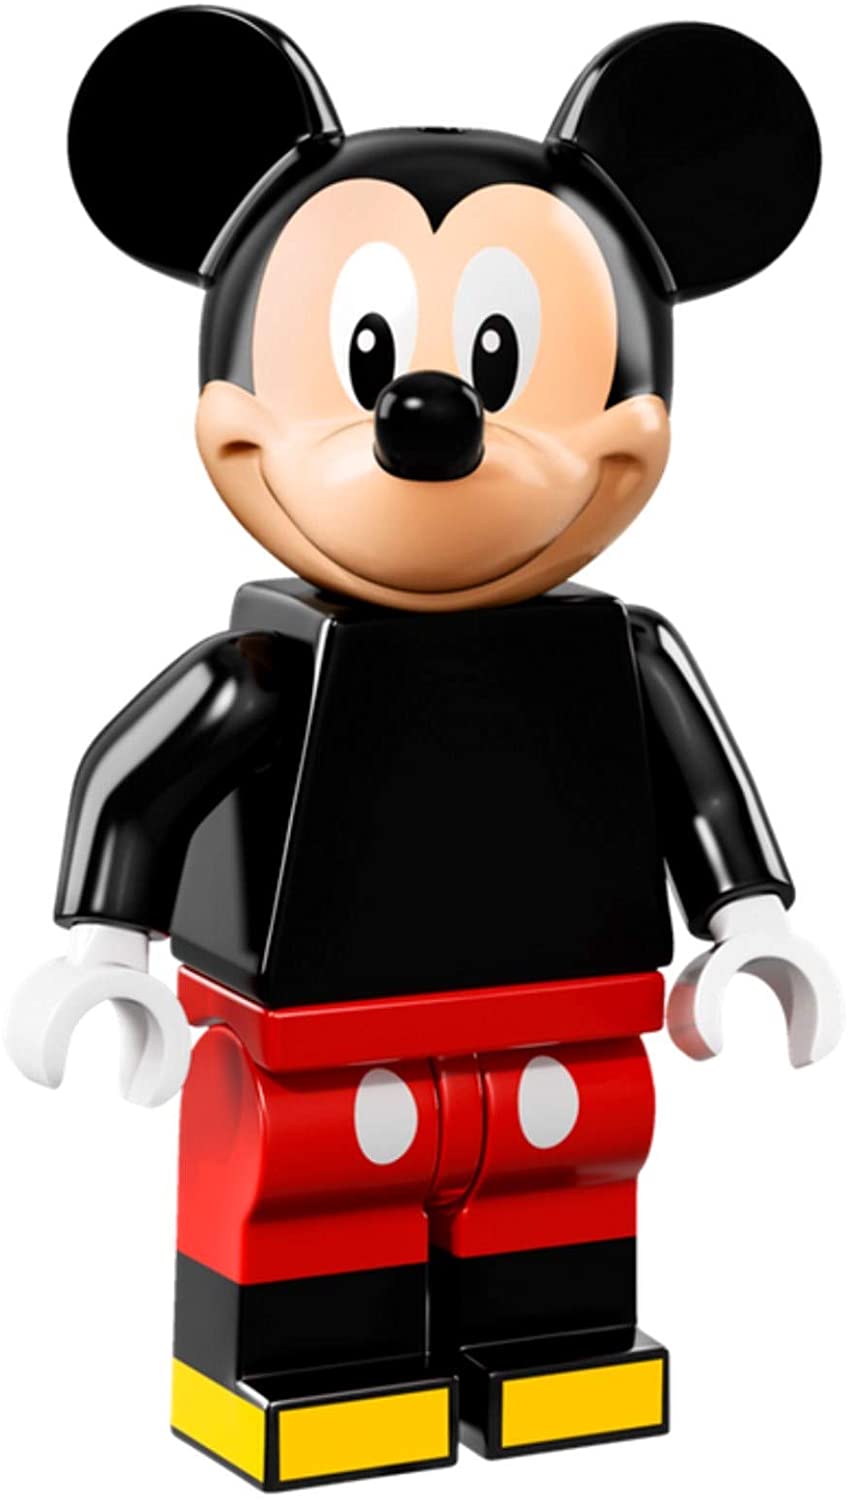 LEGO DISNEY Mickey Mouse MINIFIGURE 71012